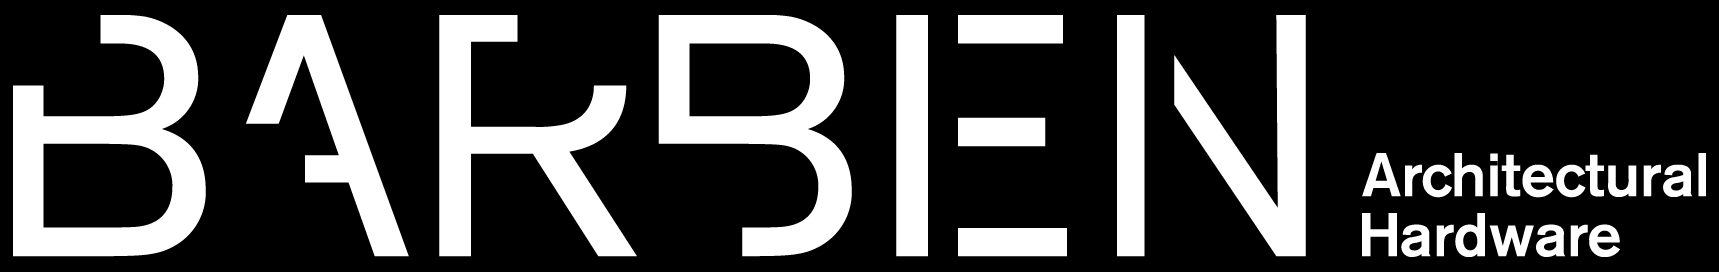 barben industries logo reversed